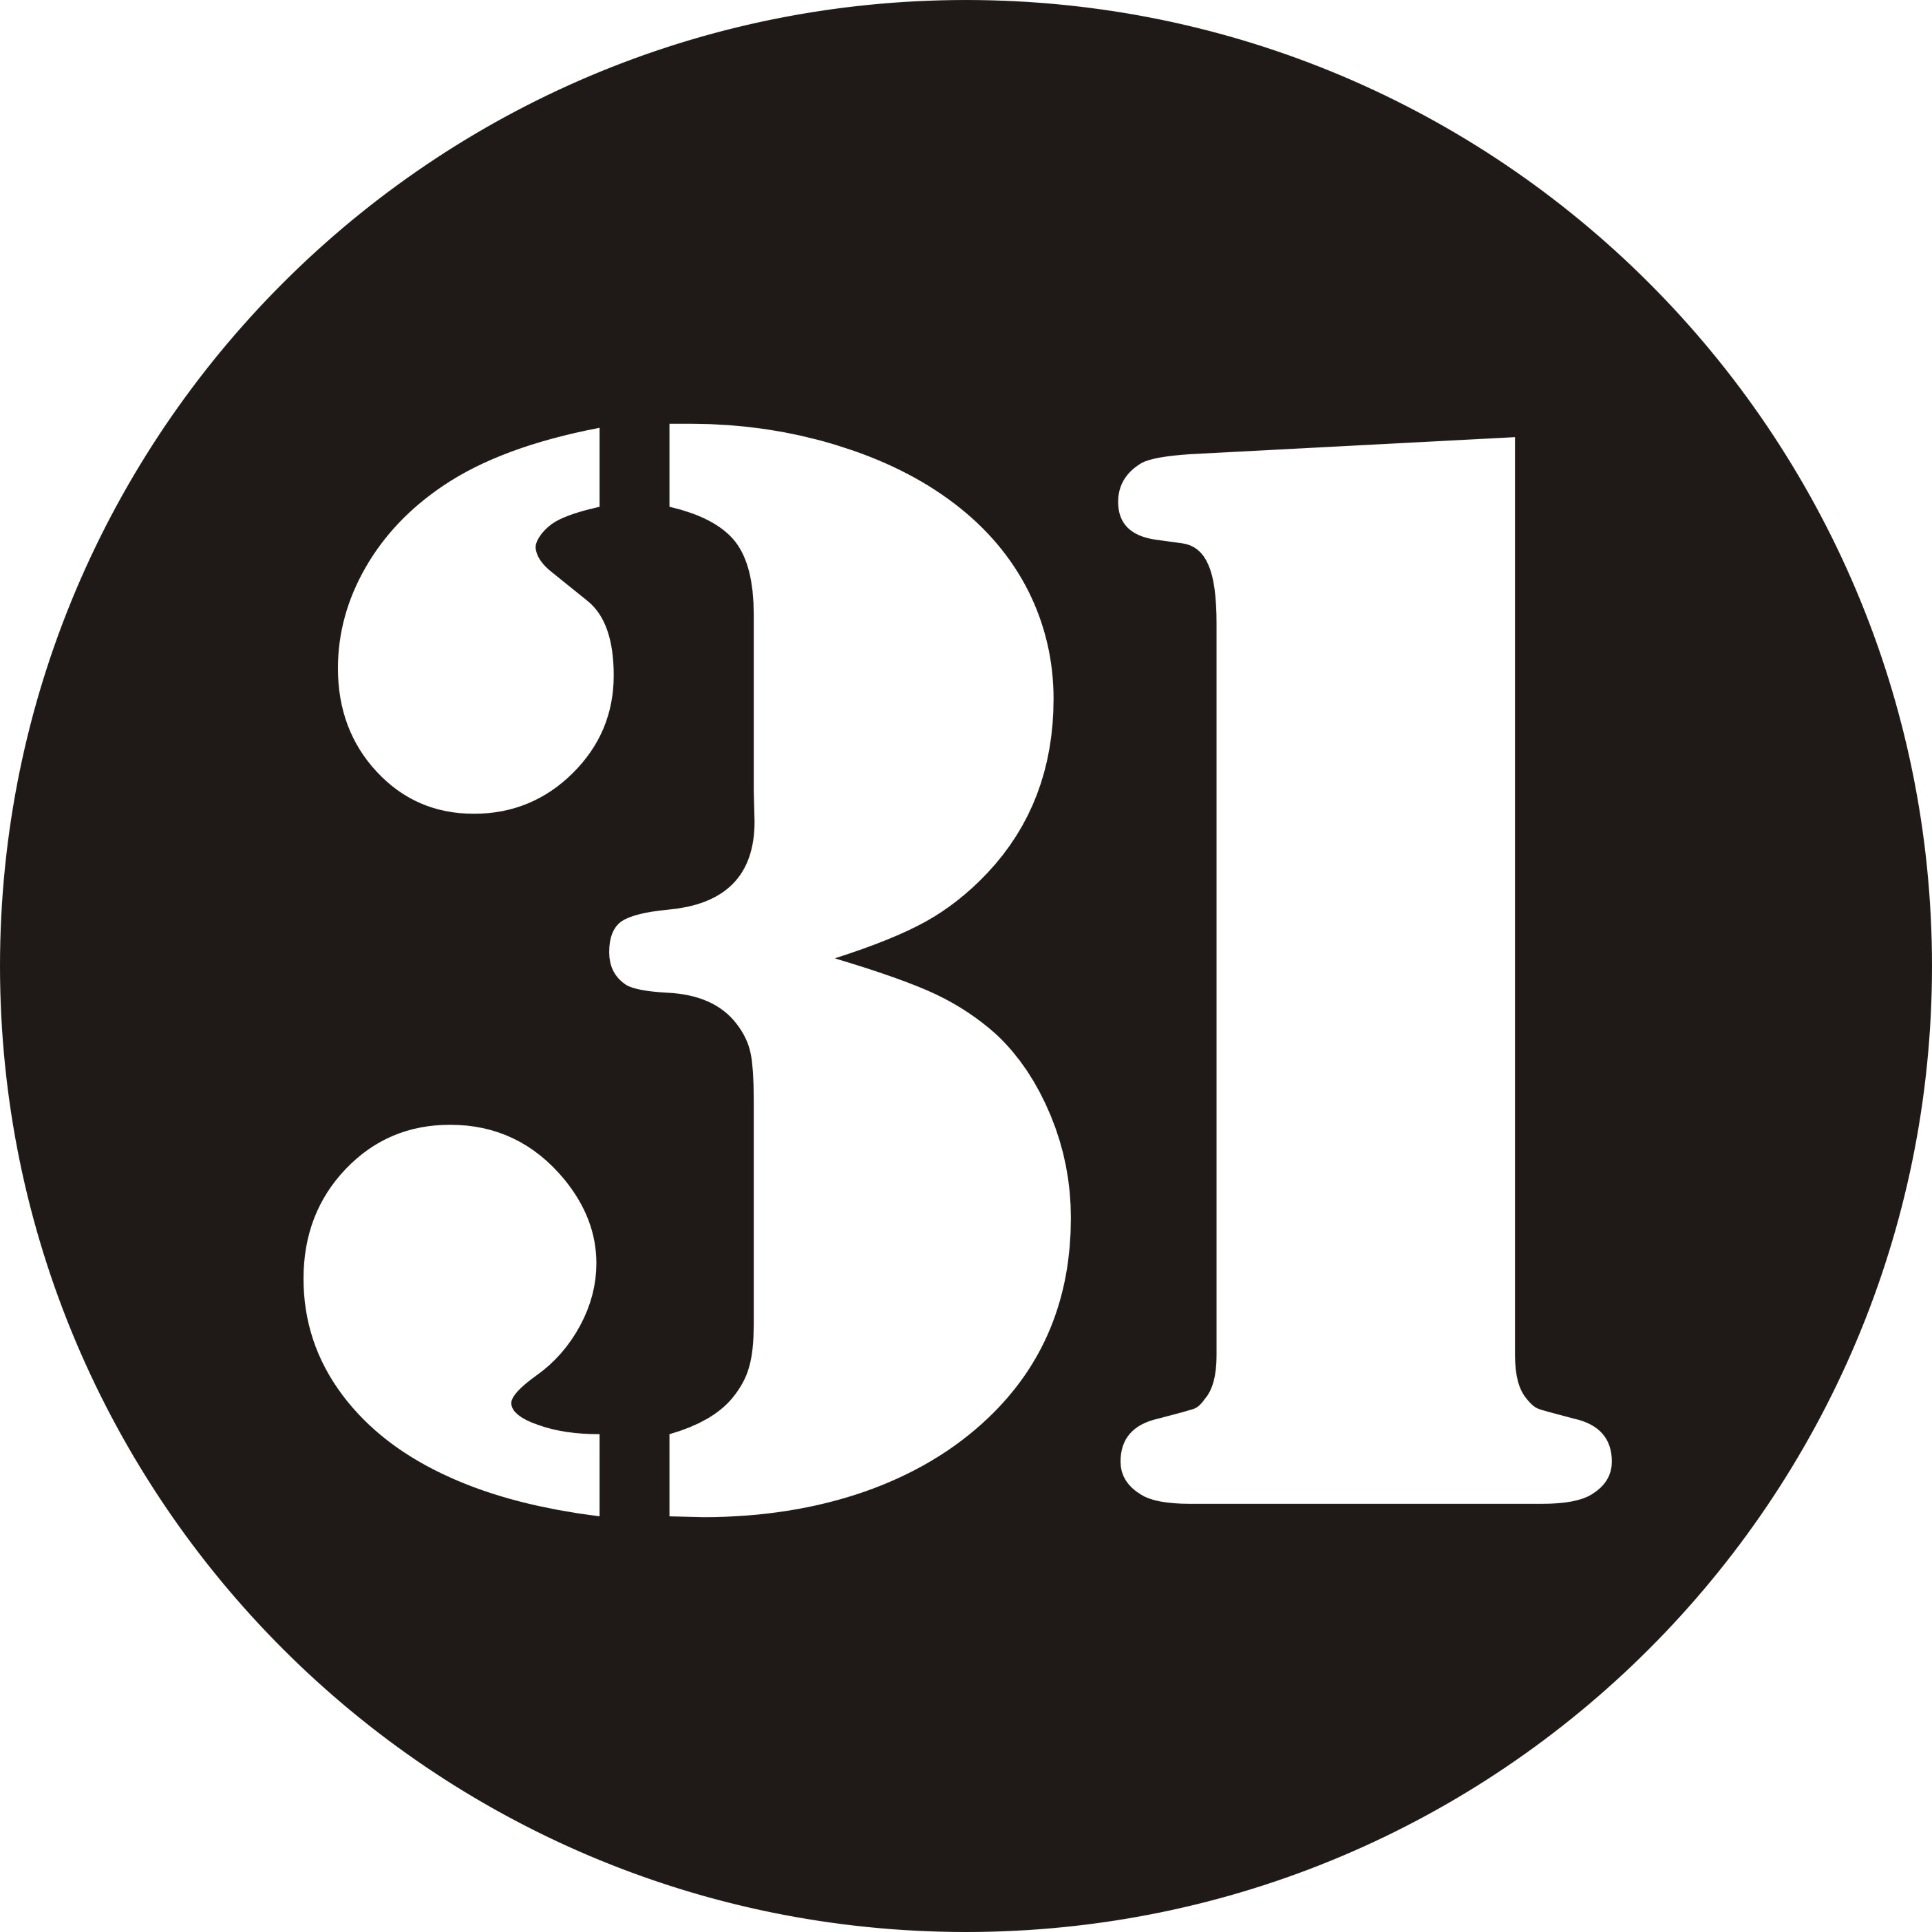 31 Logo - File:Strategy-31 logo.png - Wikimedia Commons